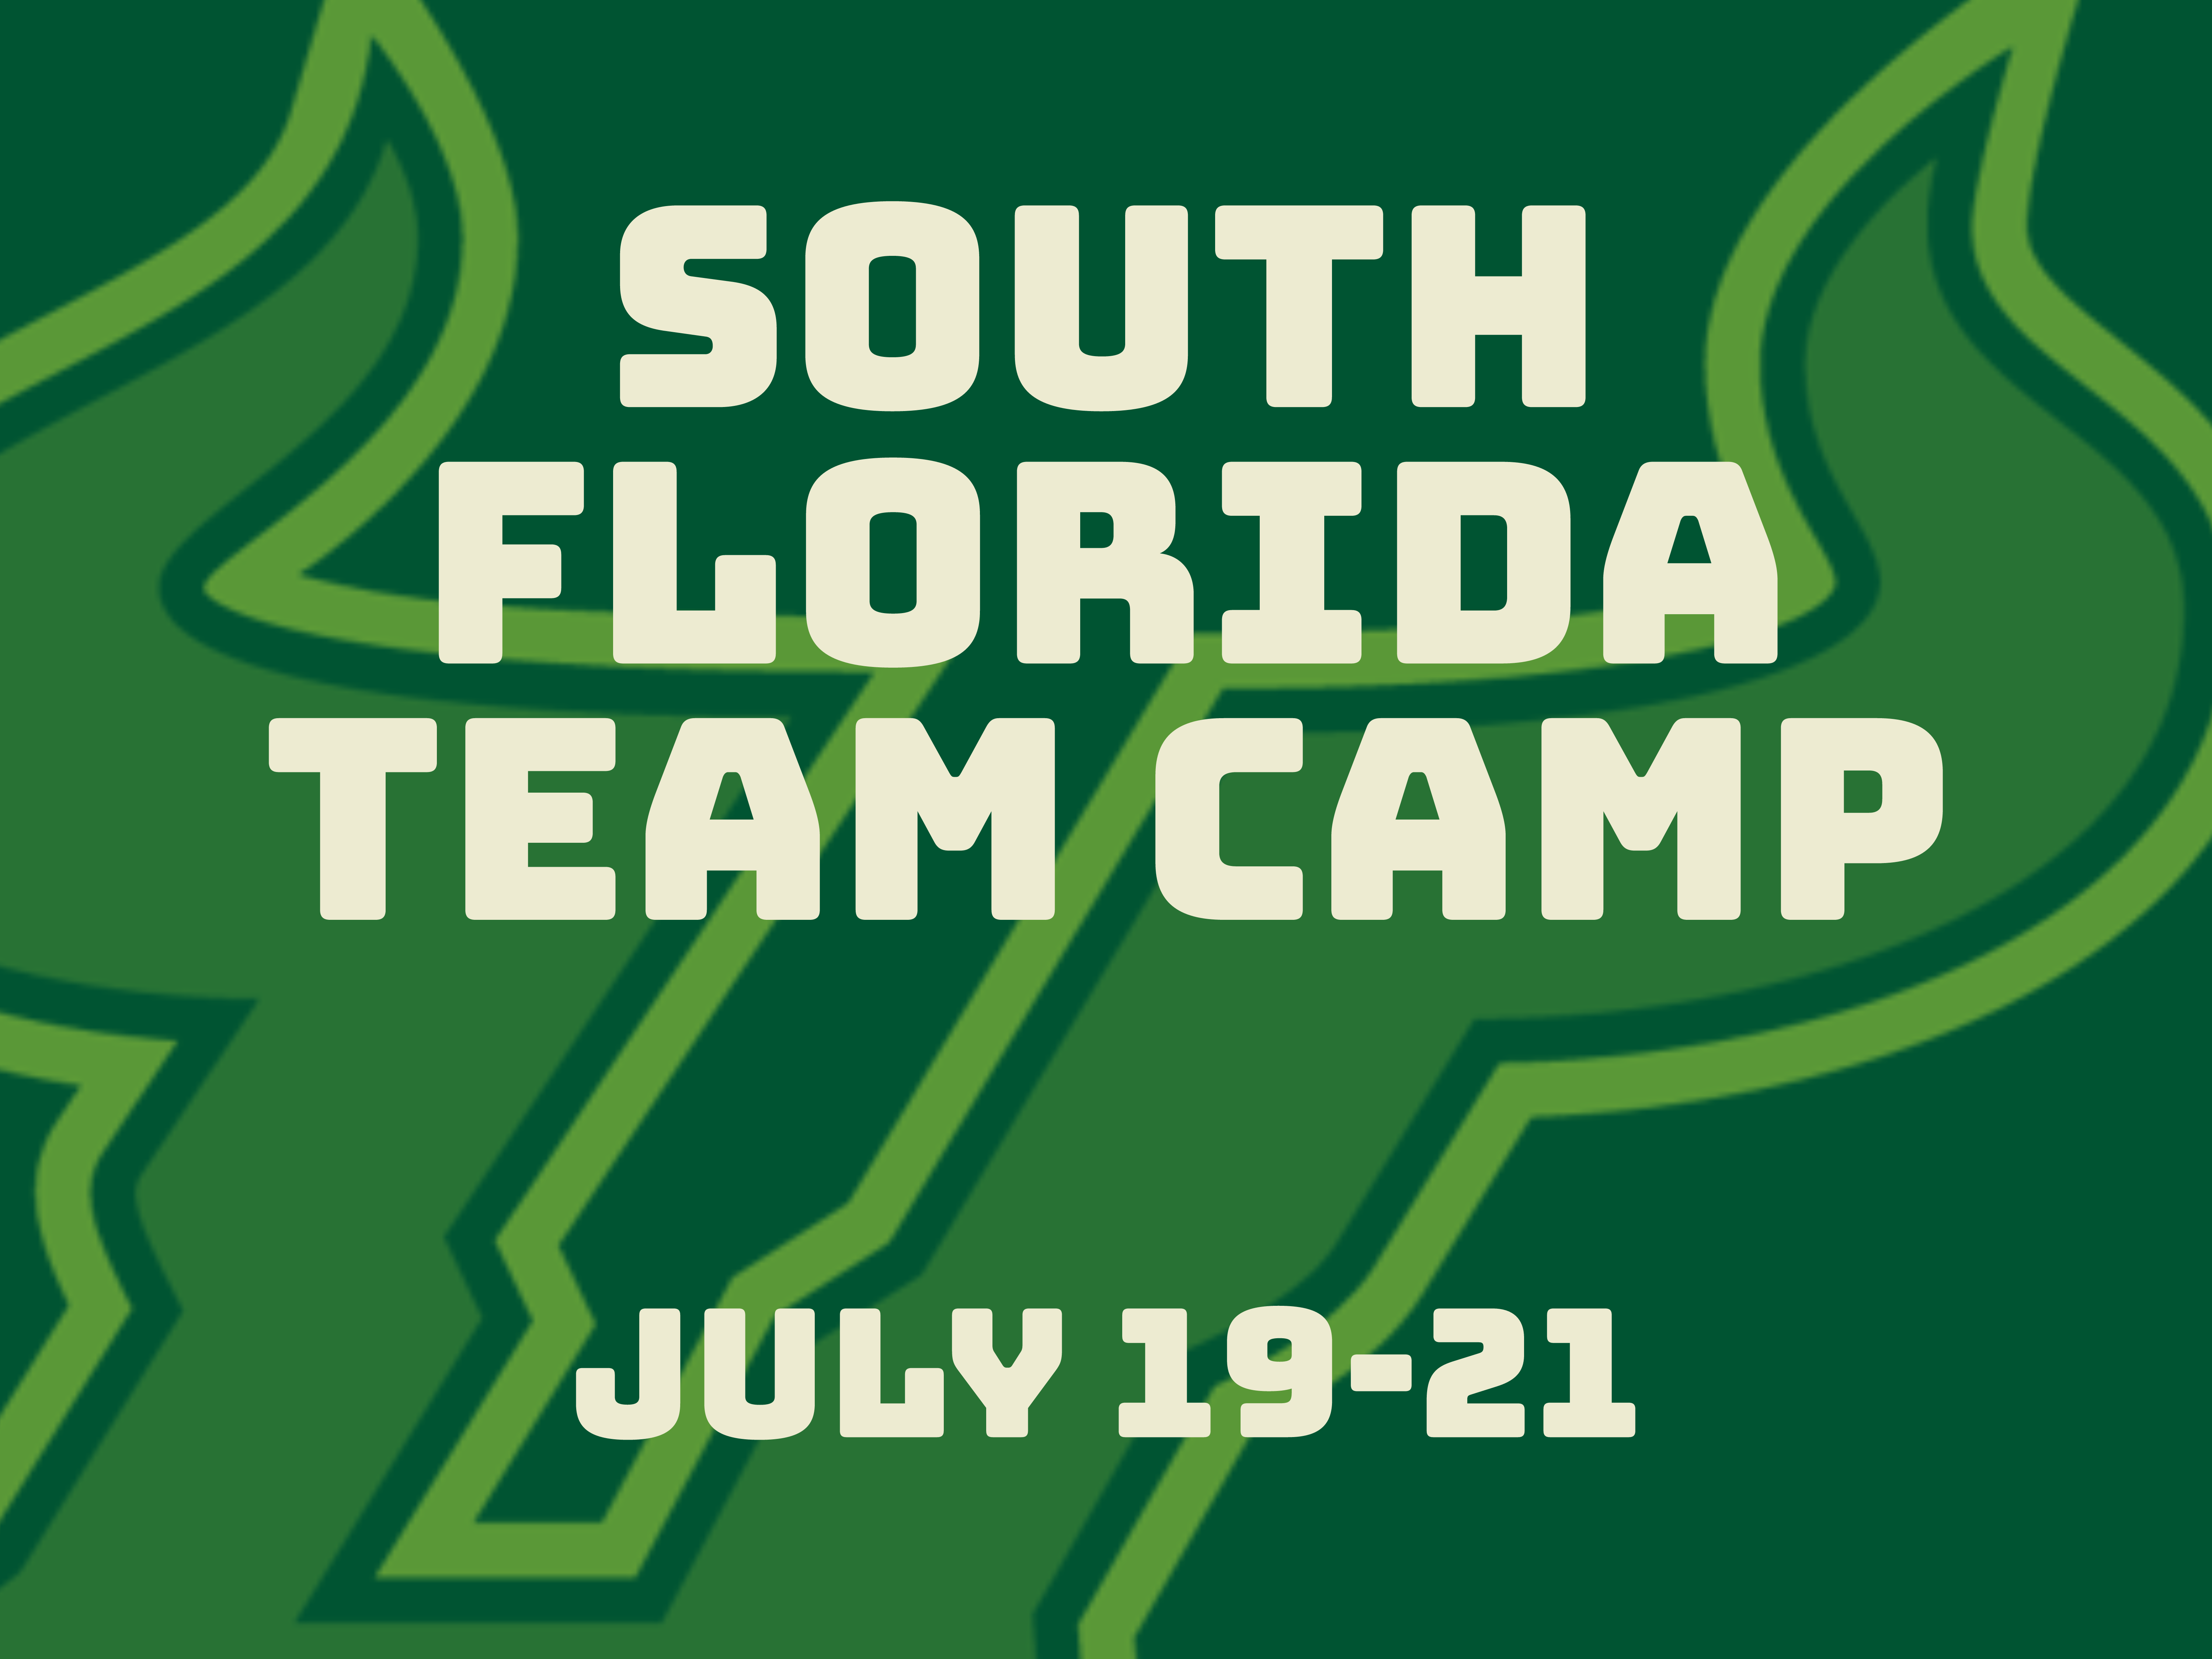 South Florida Team Camp - Land O Lakes A event image